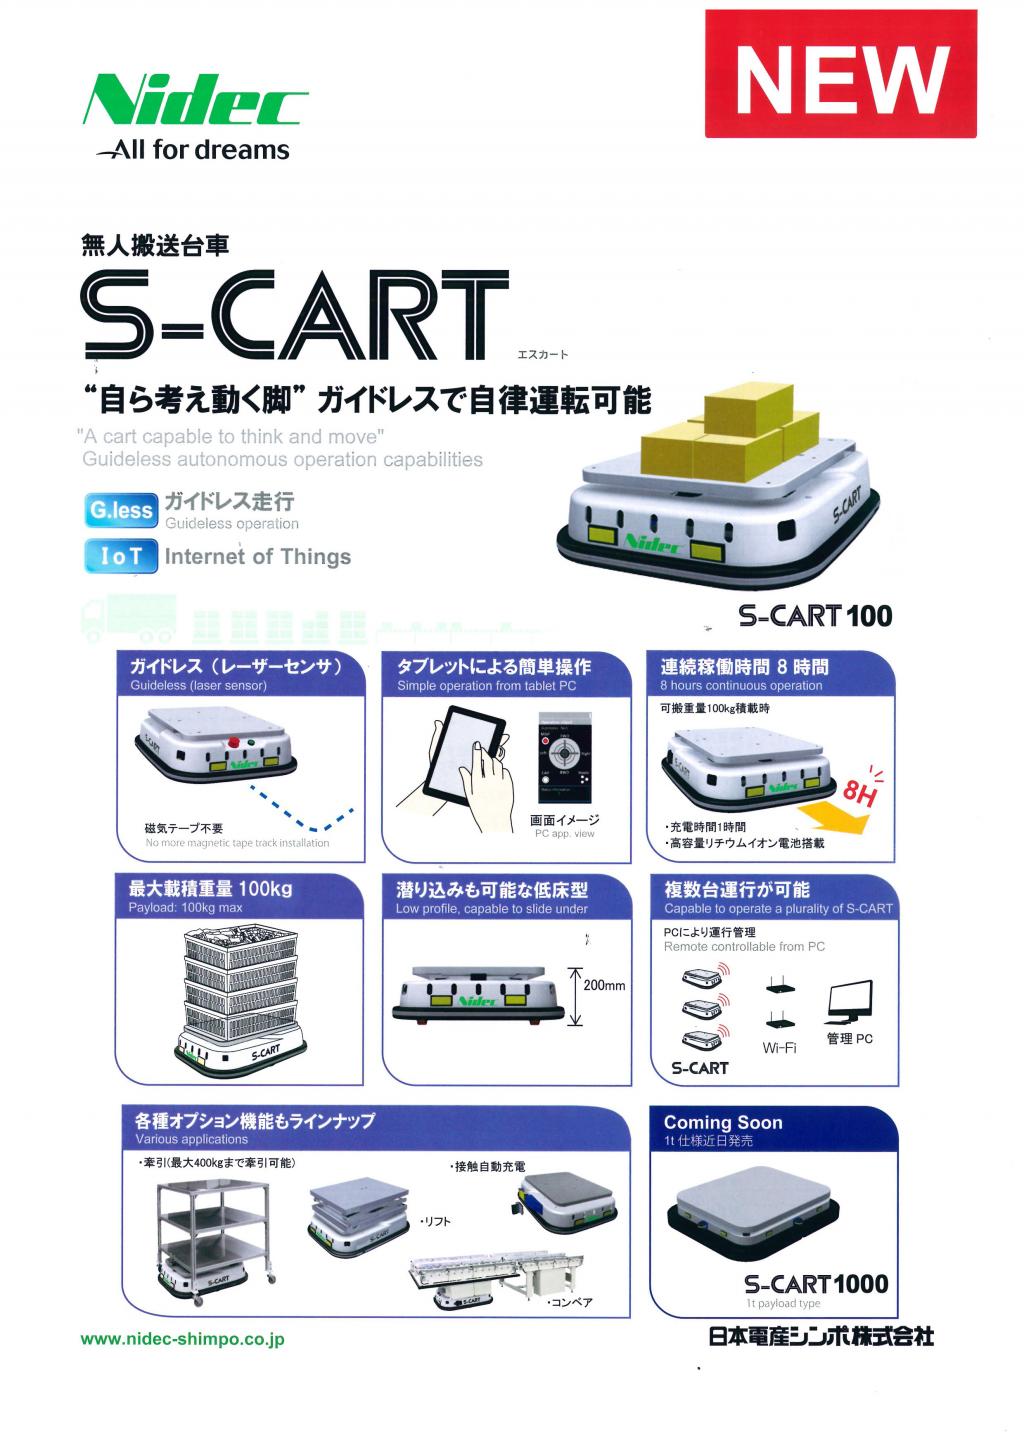 【新商品情報】Nidek 無人搬送台車 S-CART 日本電産シンポ(株)